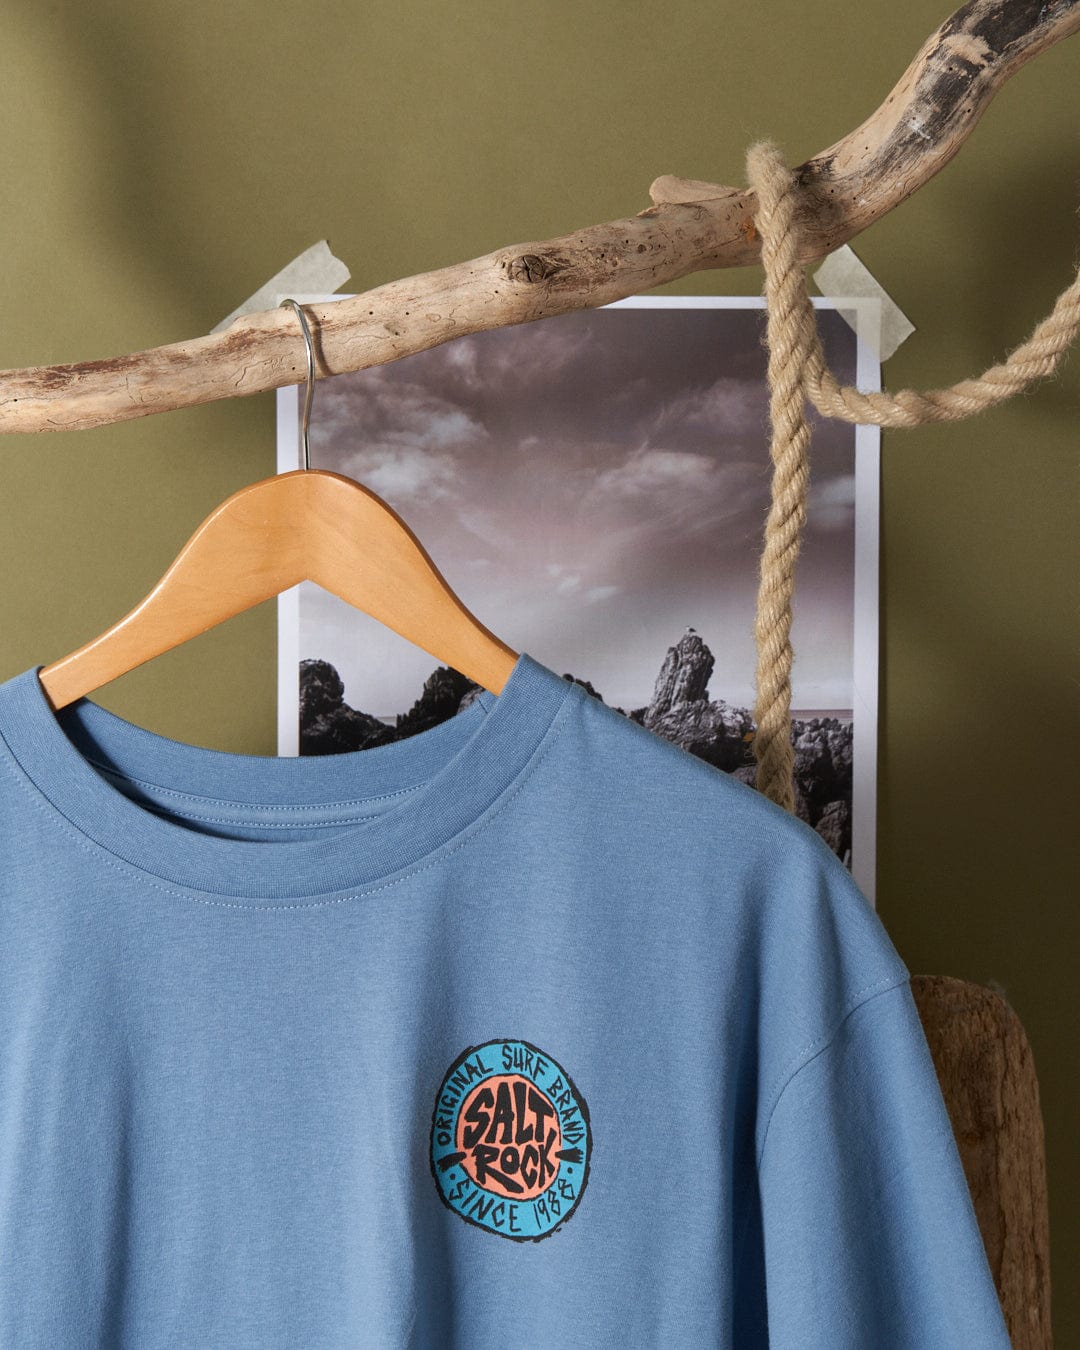 Saltrock SR Original - Mens Short Sleeve T-Shirt - Blue with logo hanging on a wooden hanger against a backdrop with a landscape image.